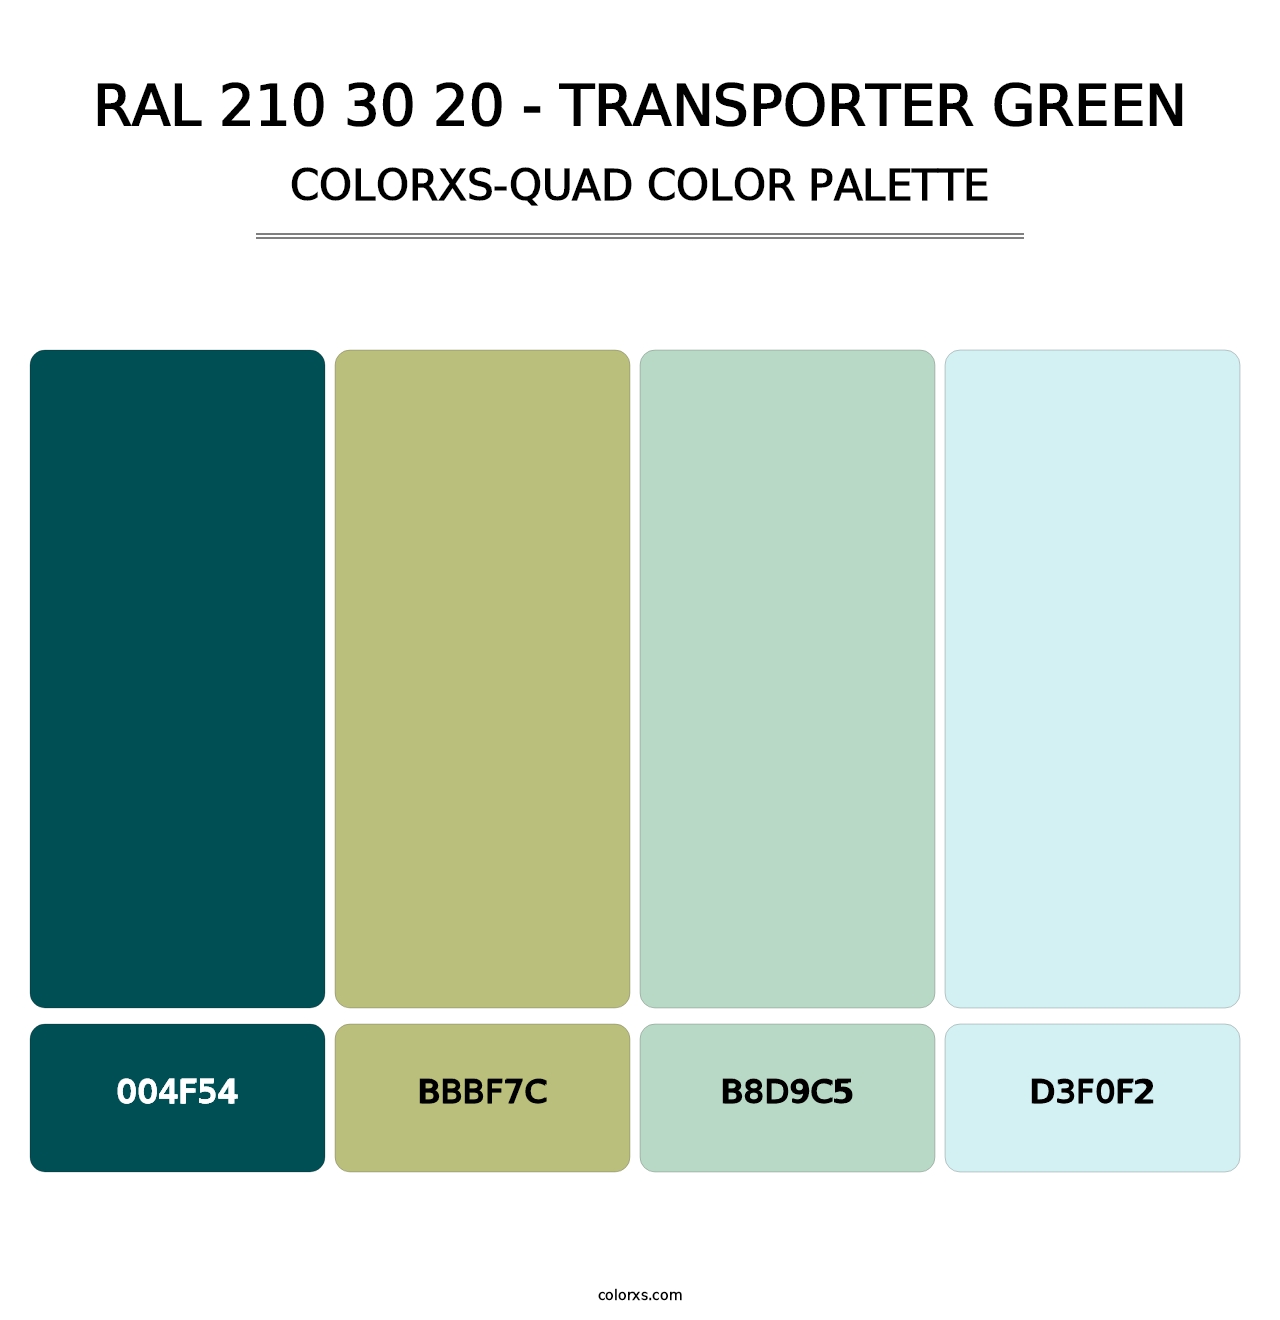 RAL 210 30 20 - Transporter Green - Colorxs Quad Palette